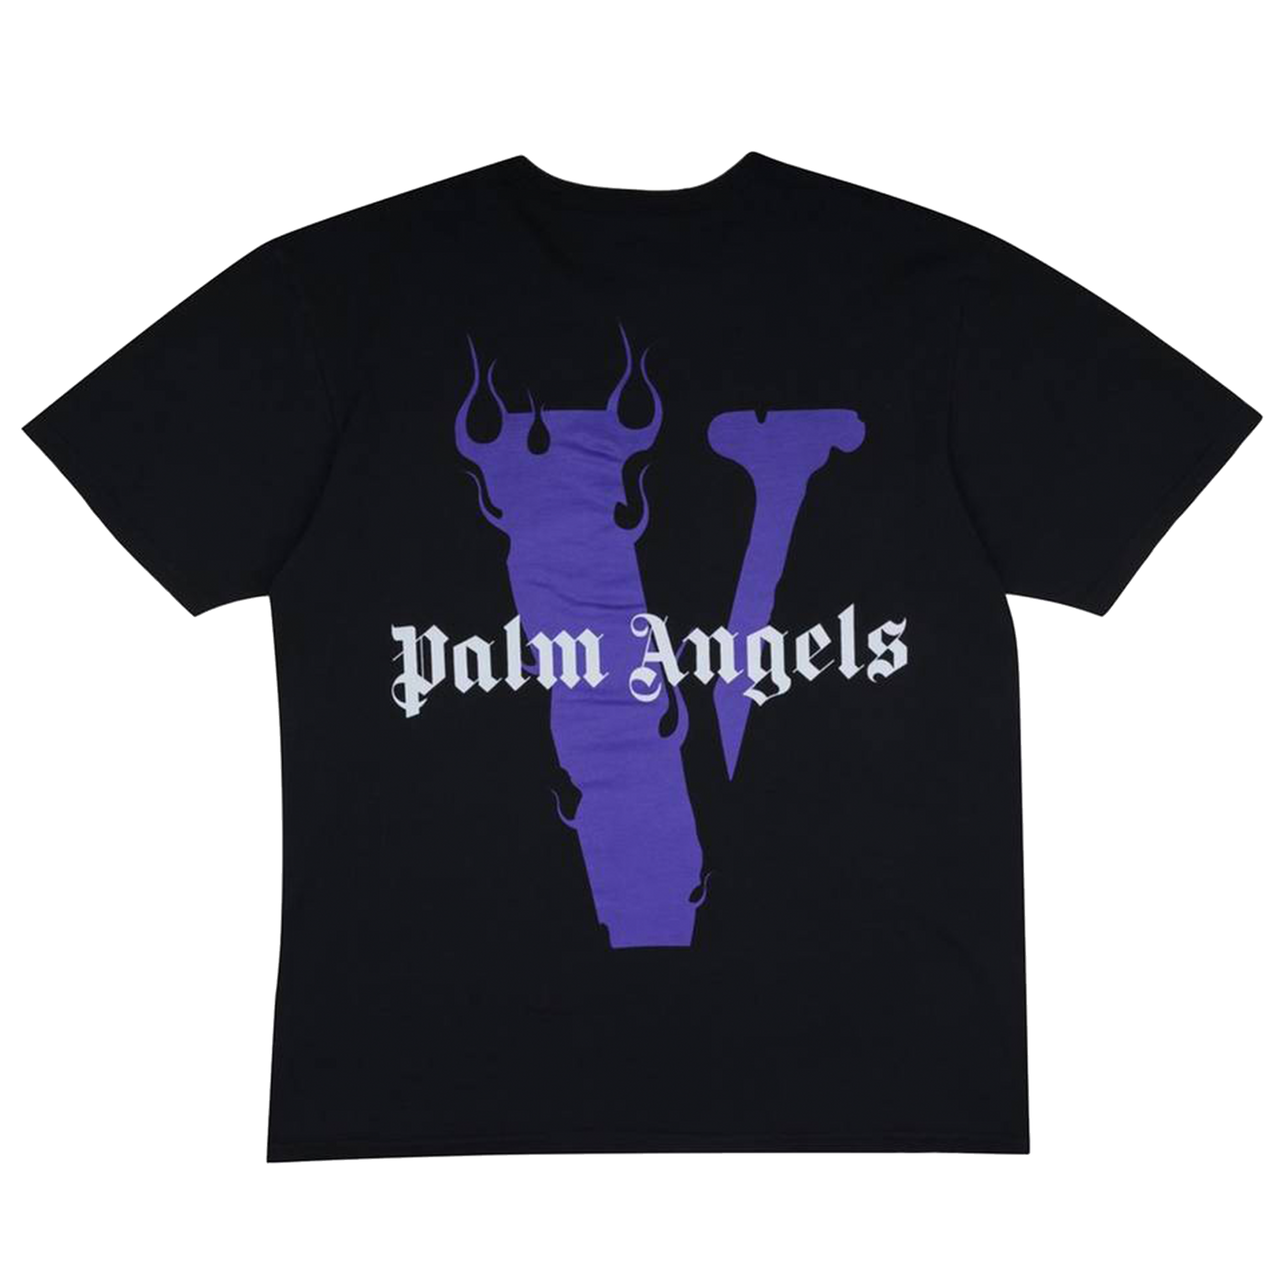 Vlone x Palm Angels Staple Tee Black Purple